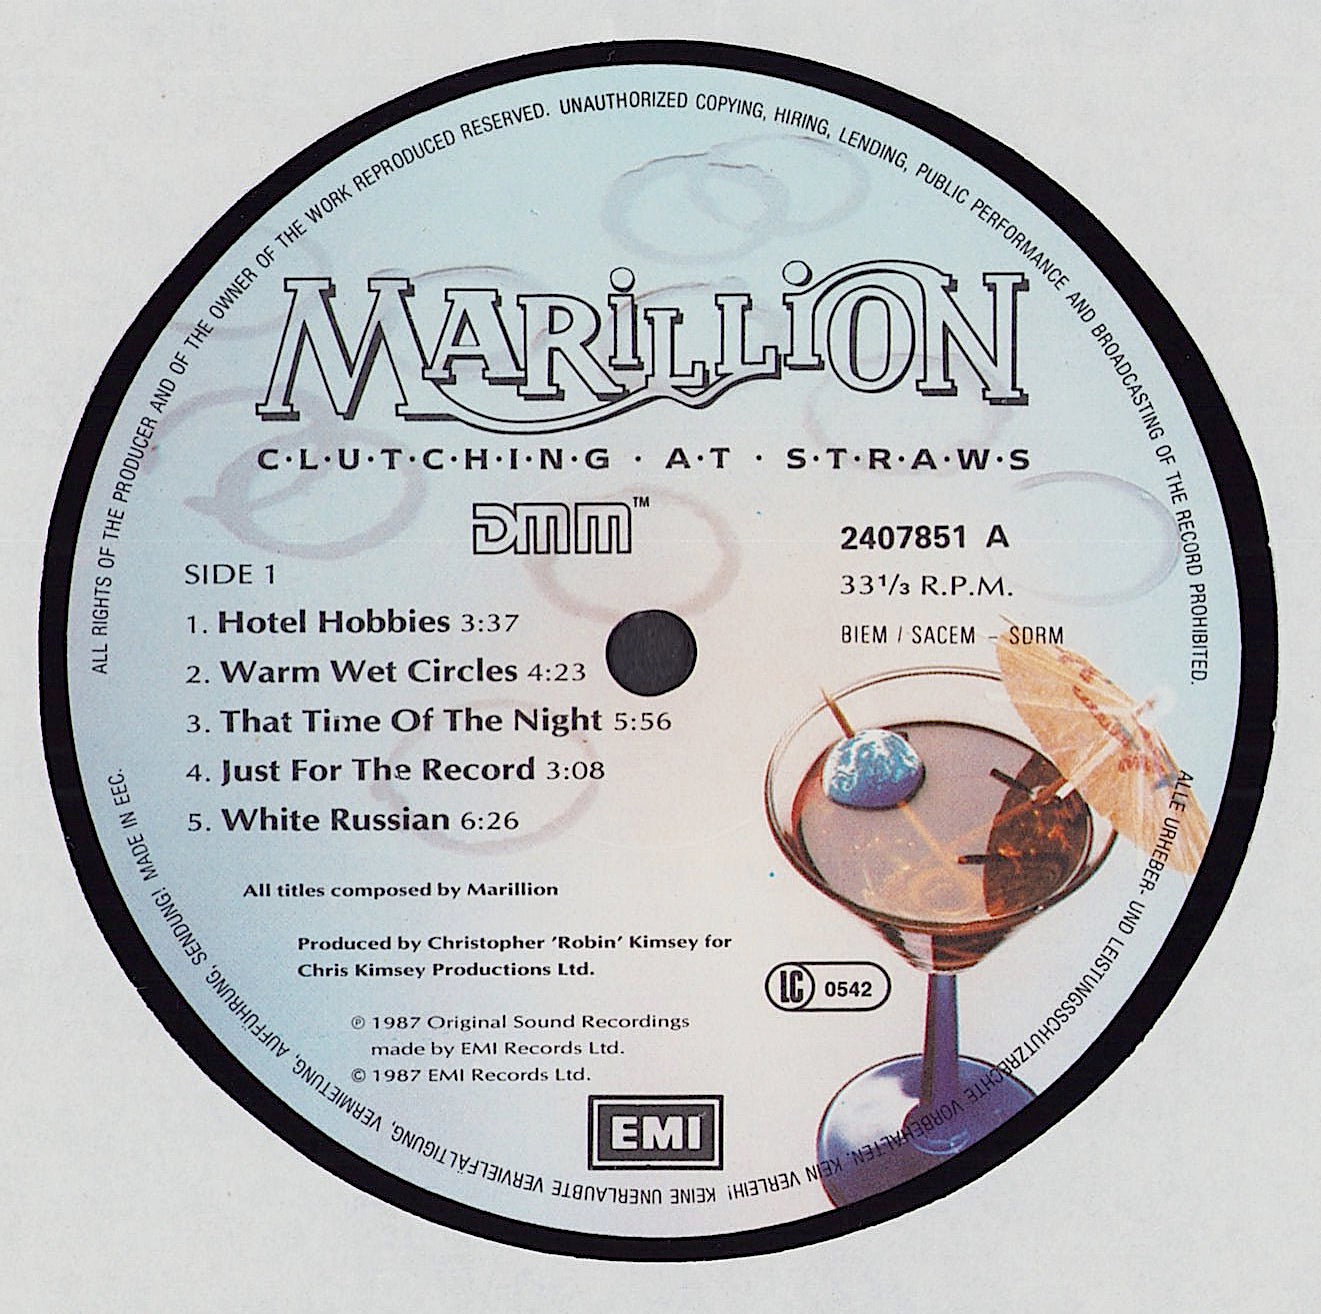 Marillion ‎- Clutching At Straws (Vinyl LP)